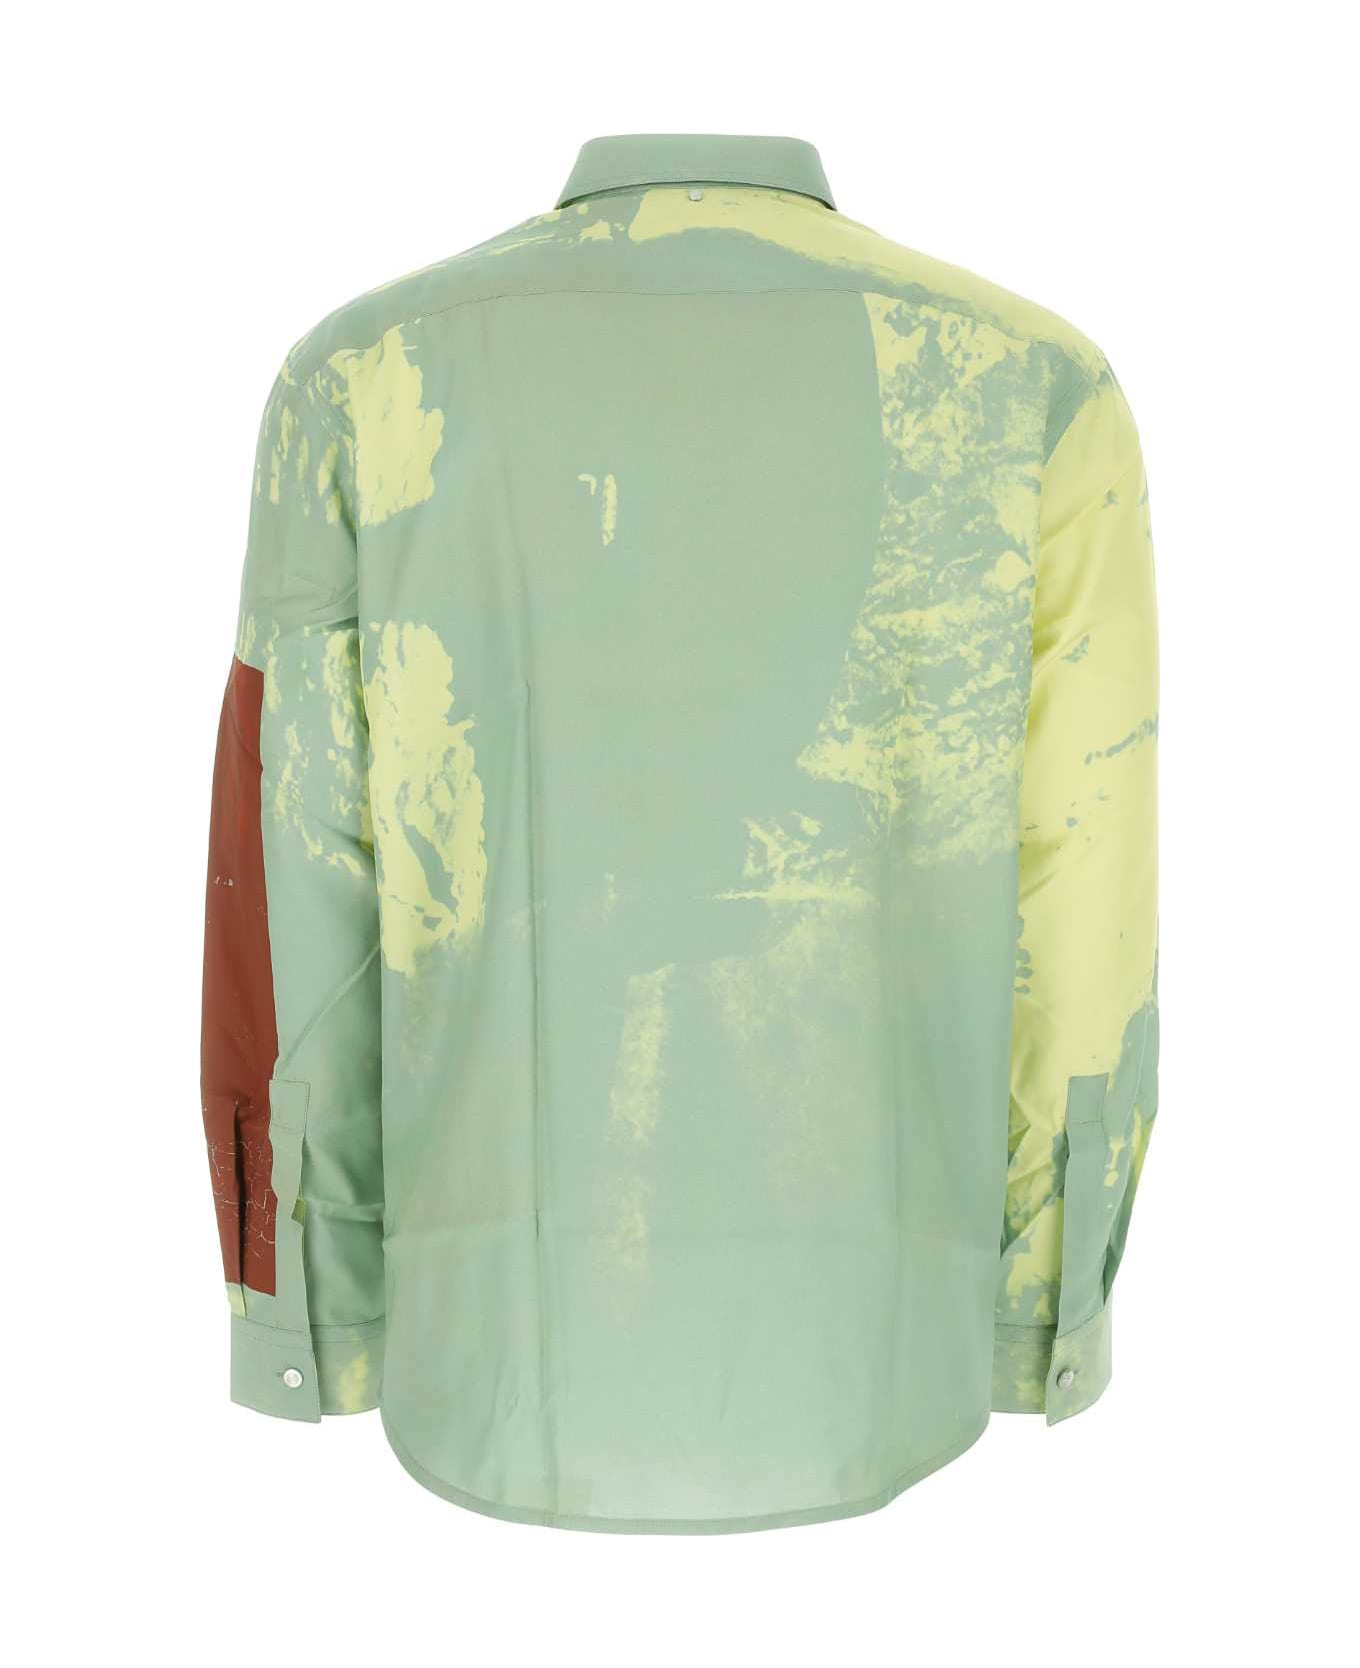 OAMC Printed Viscose Oversize Shirt - Multicolor